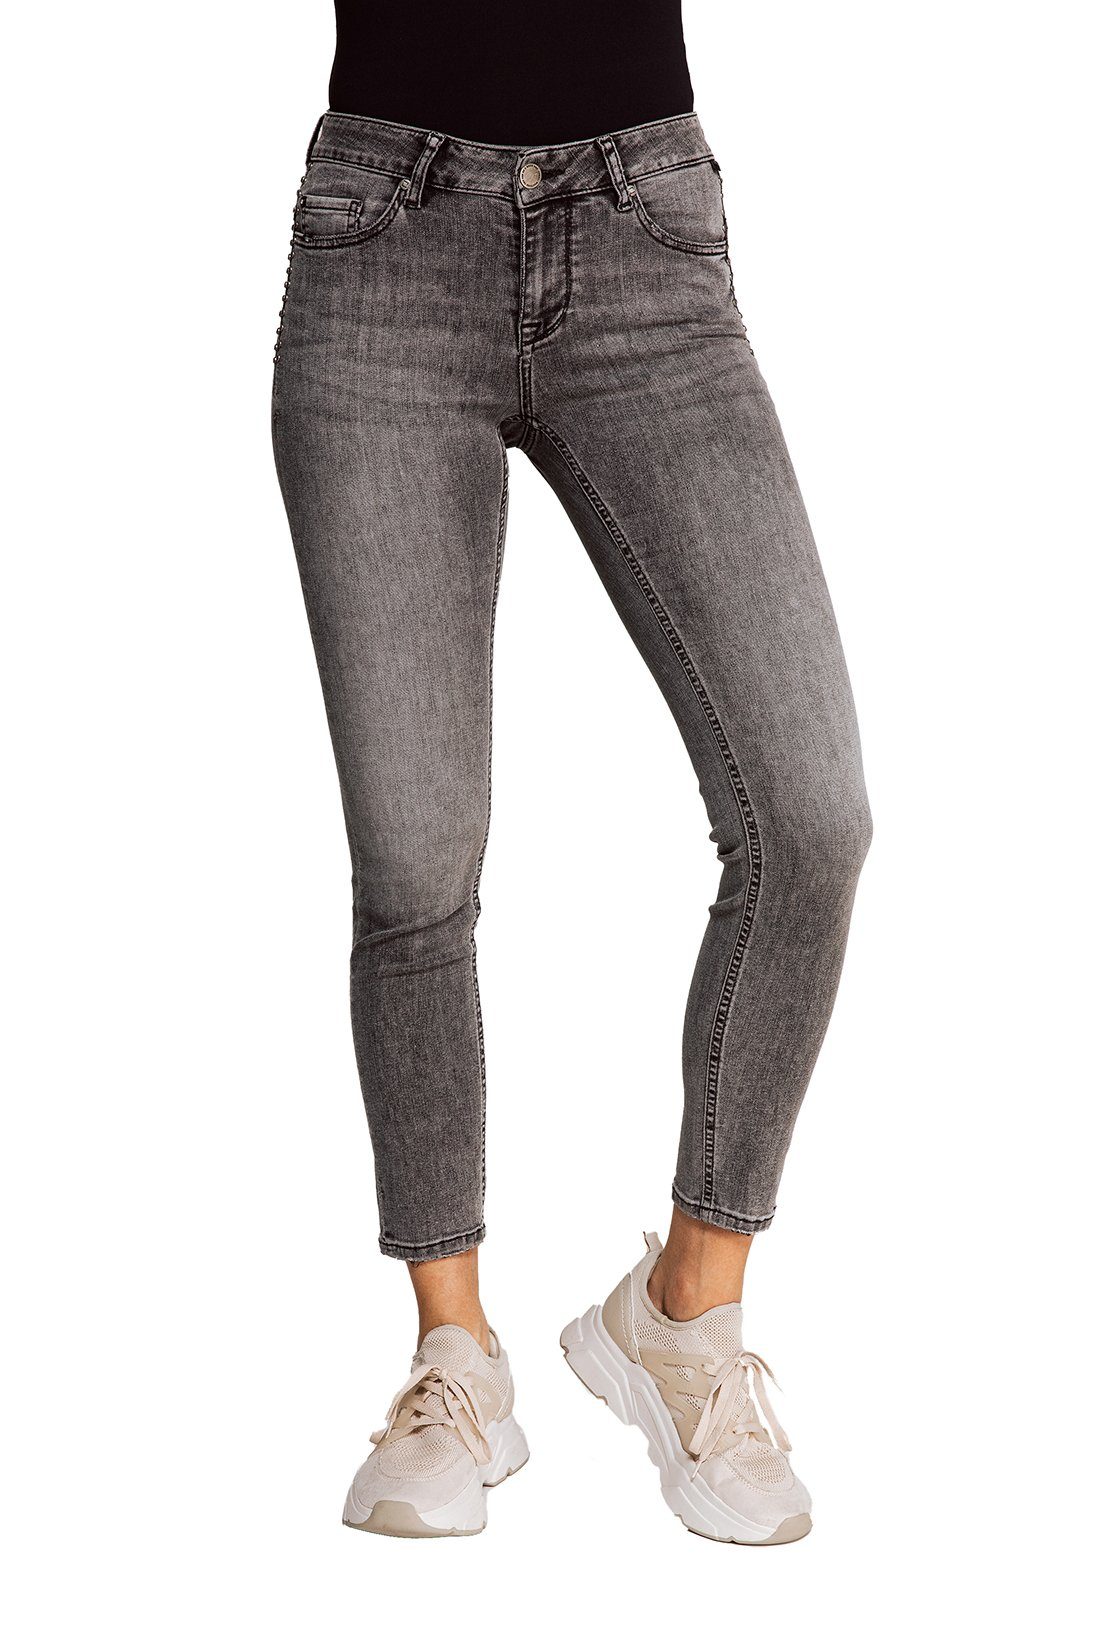 Zhrill Skinny-fit-Jeans Skinny Jeans DAFFY Grau angenehmer Tragekomfort | Skinny Jeans